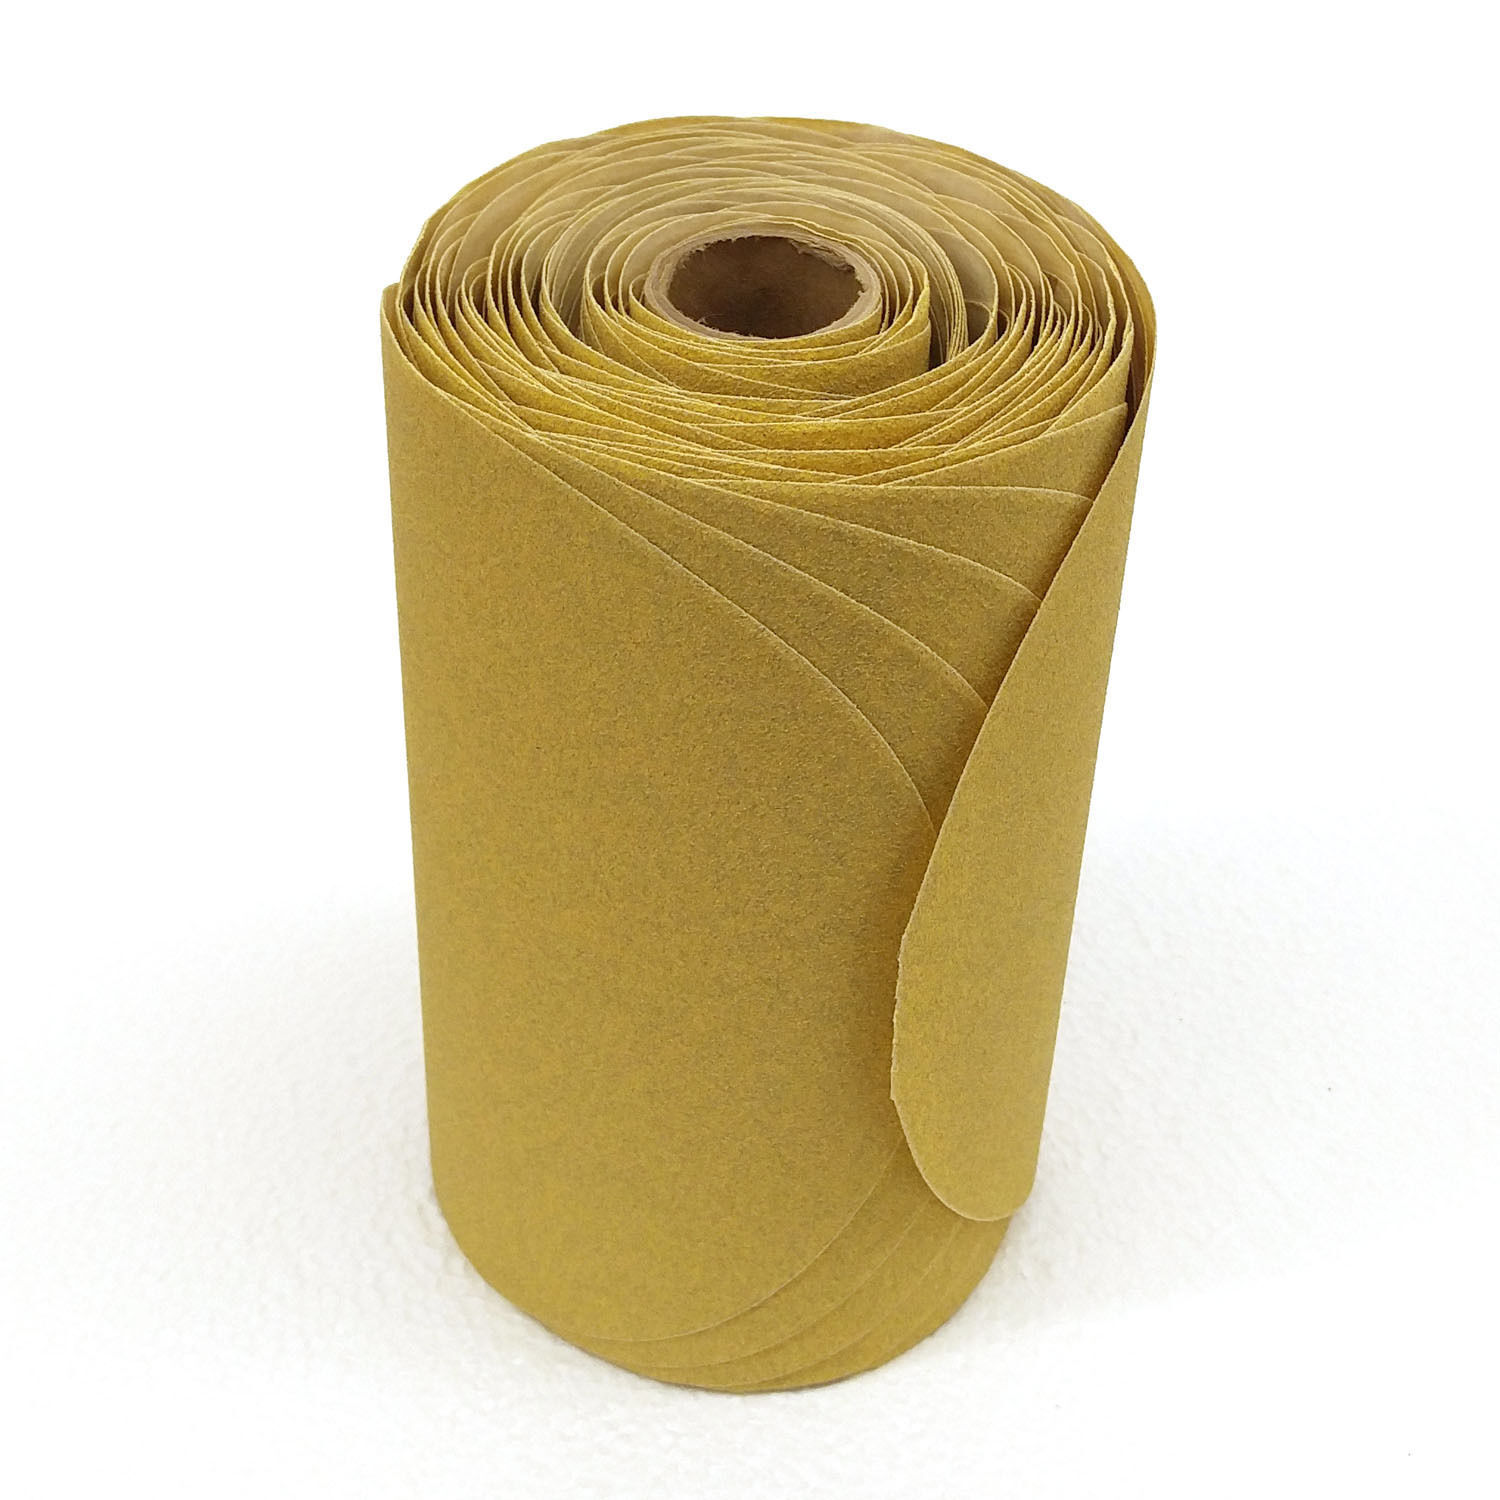 Premium Gold 6" Stick-It  Sanding Discs Roll 120 Grit 100 Discs per Roll Sticky